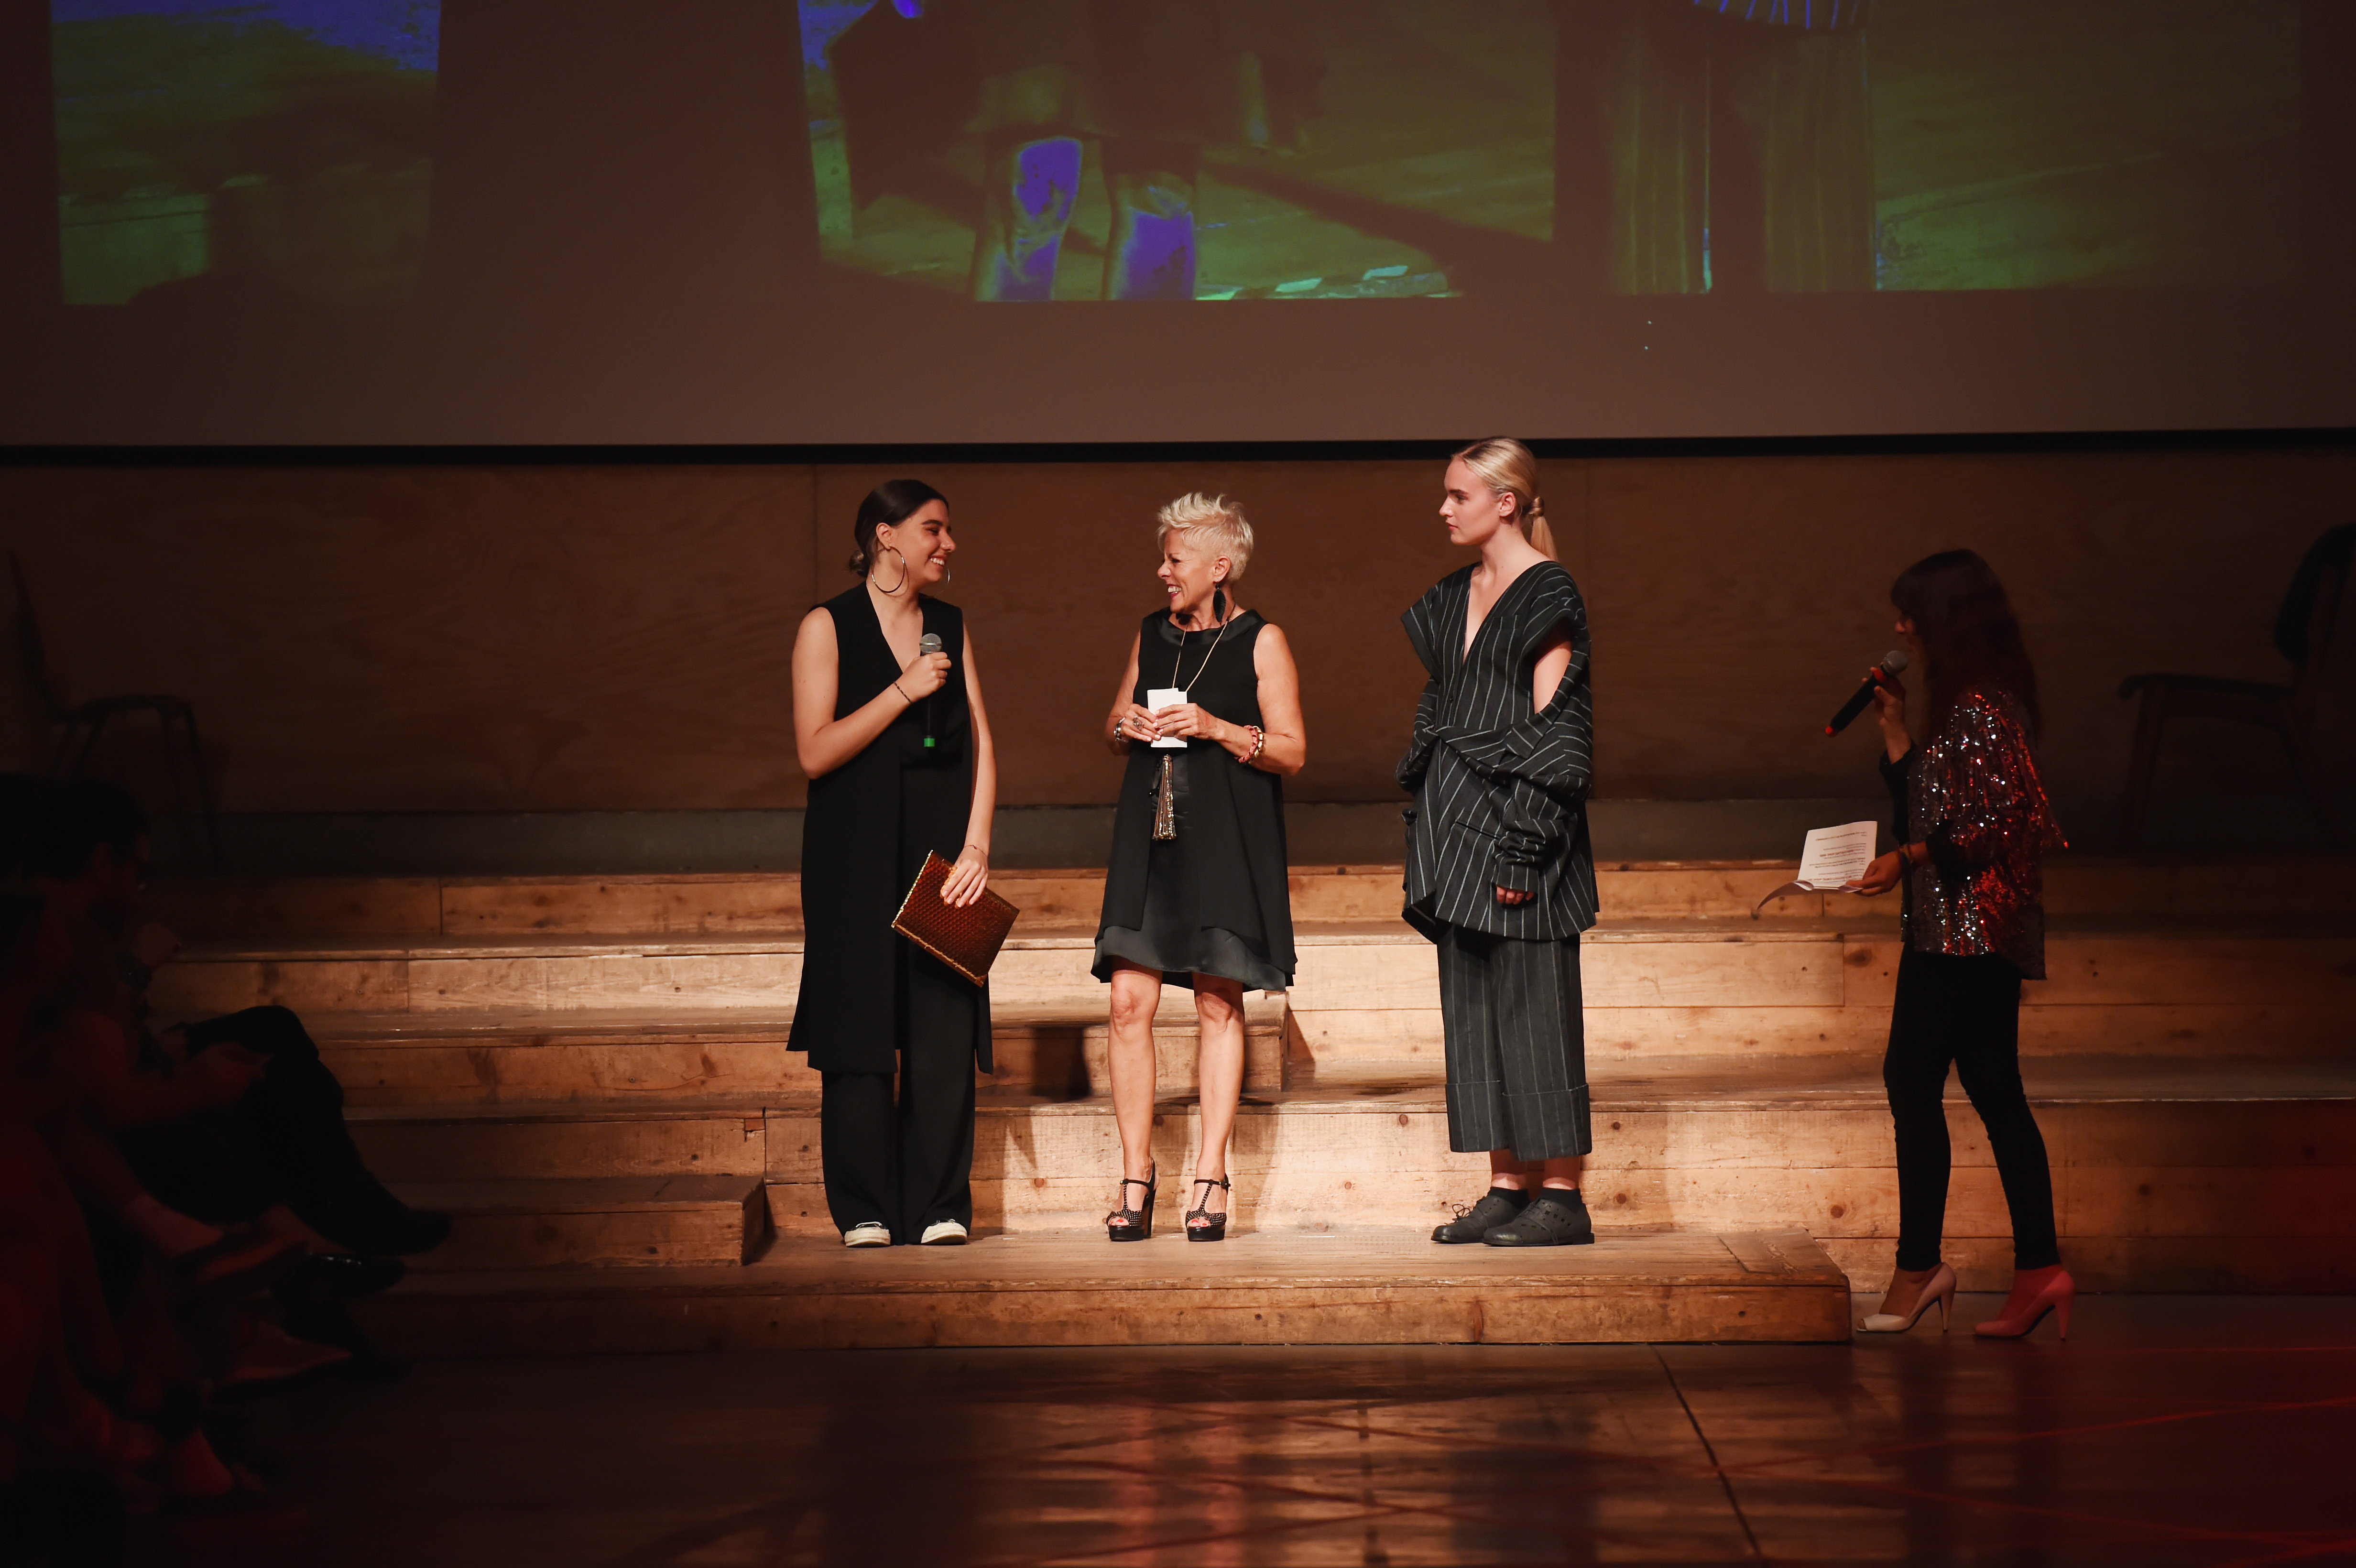 Winner of the Lectra Award, of the Denim Design Award, Maria Capellaro from NABA - Nuova Accademia d